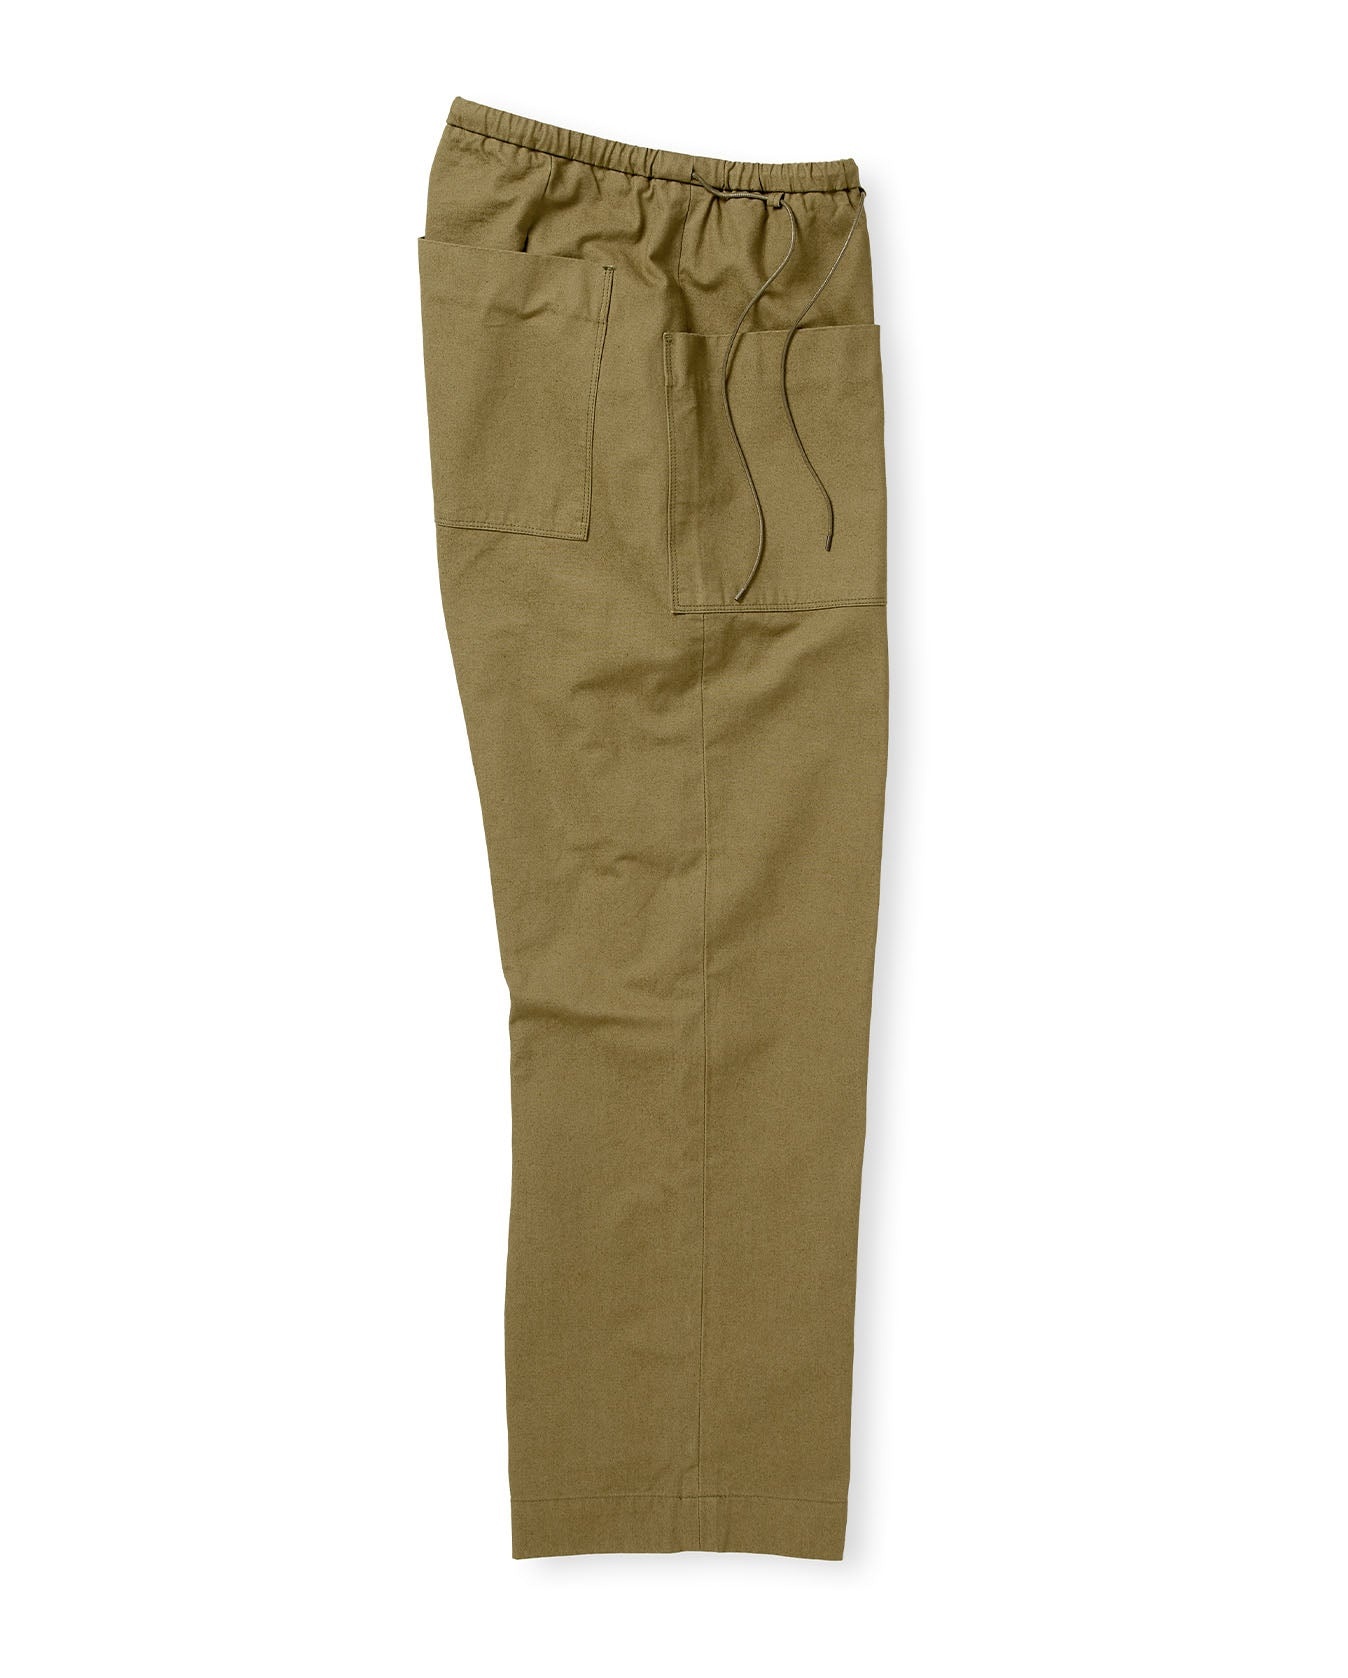 Japanese US Army Fatigue Pants - Military Green - 2